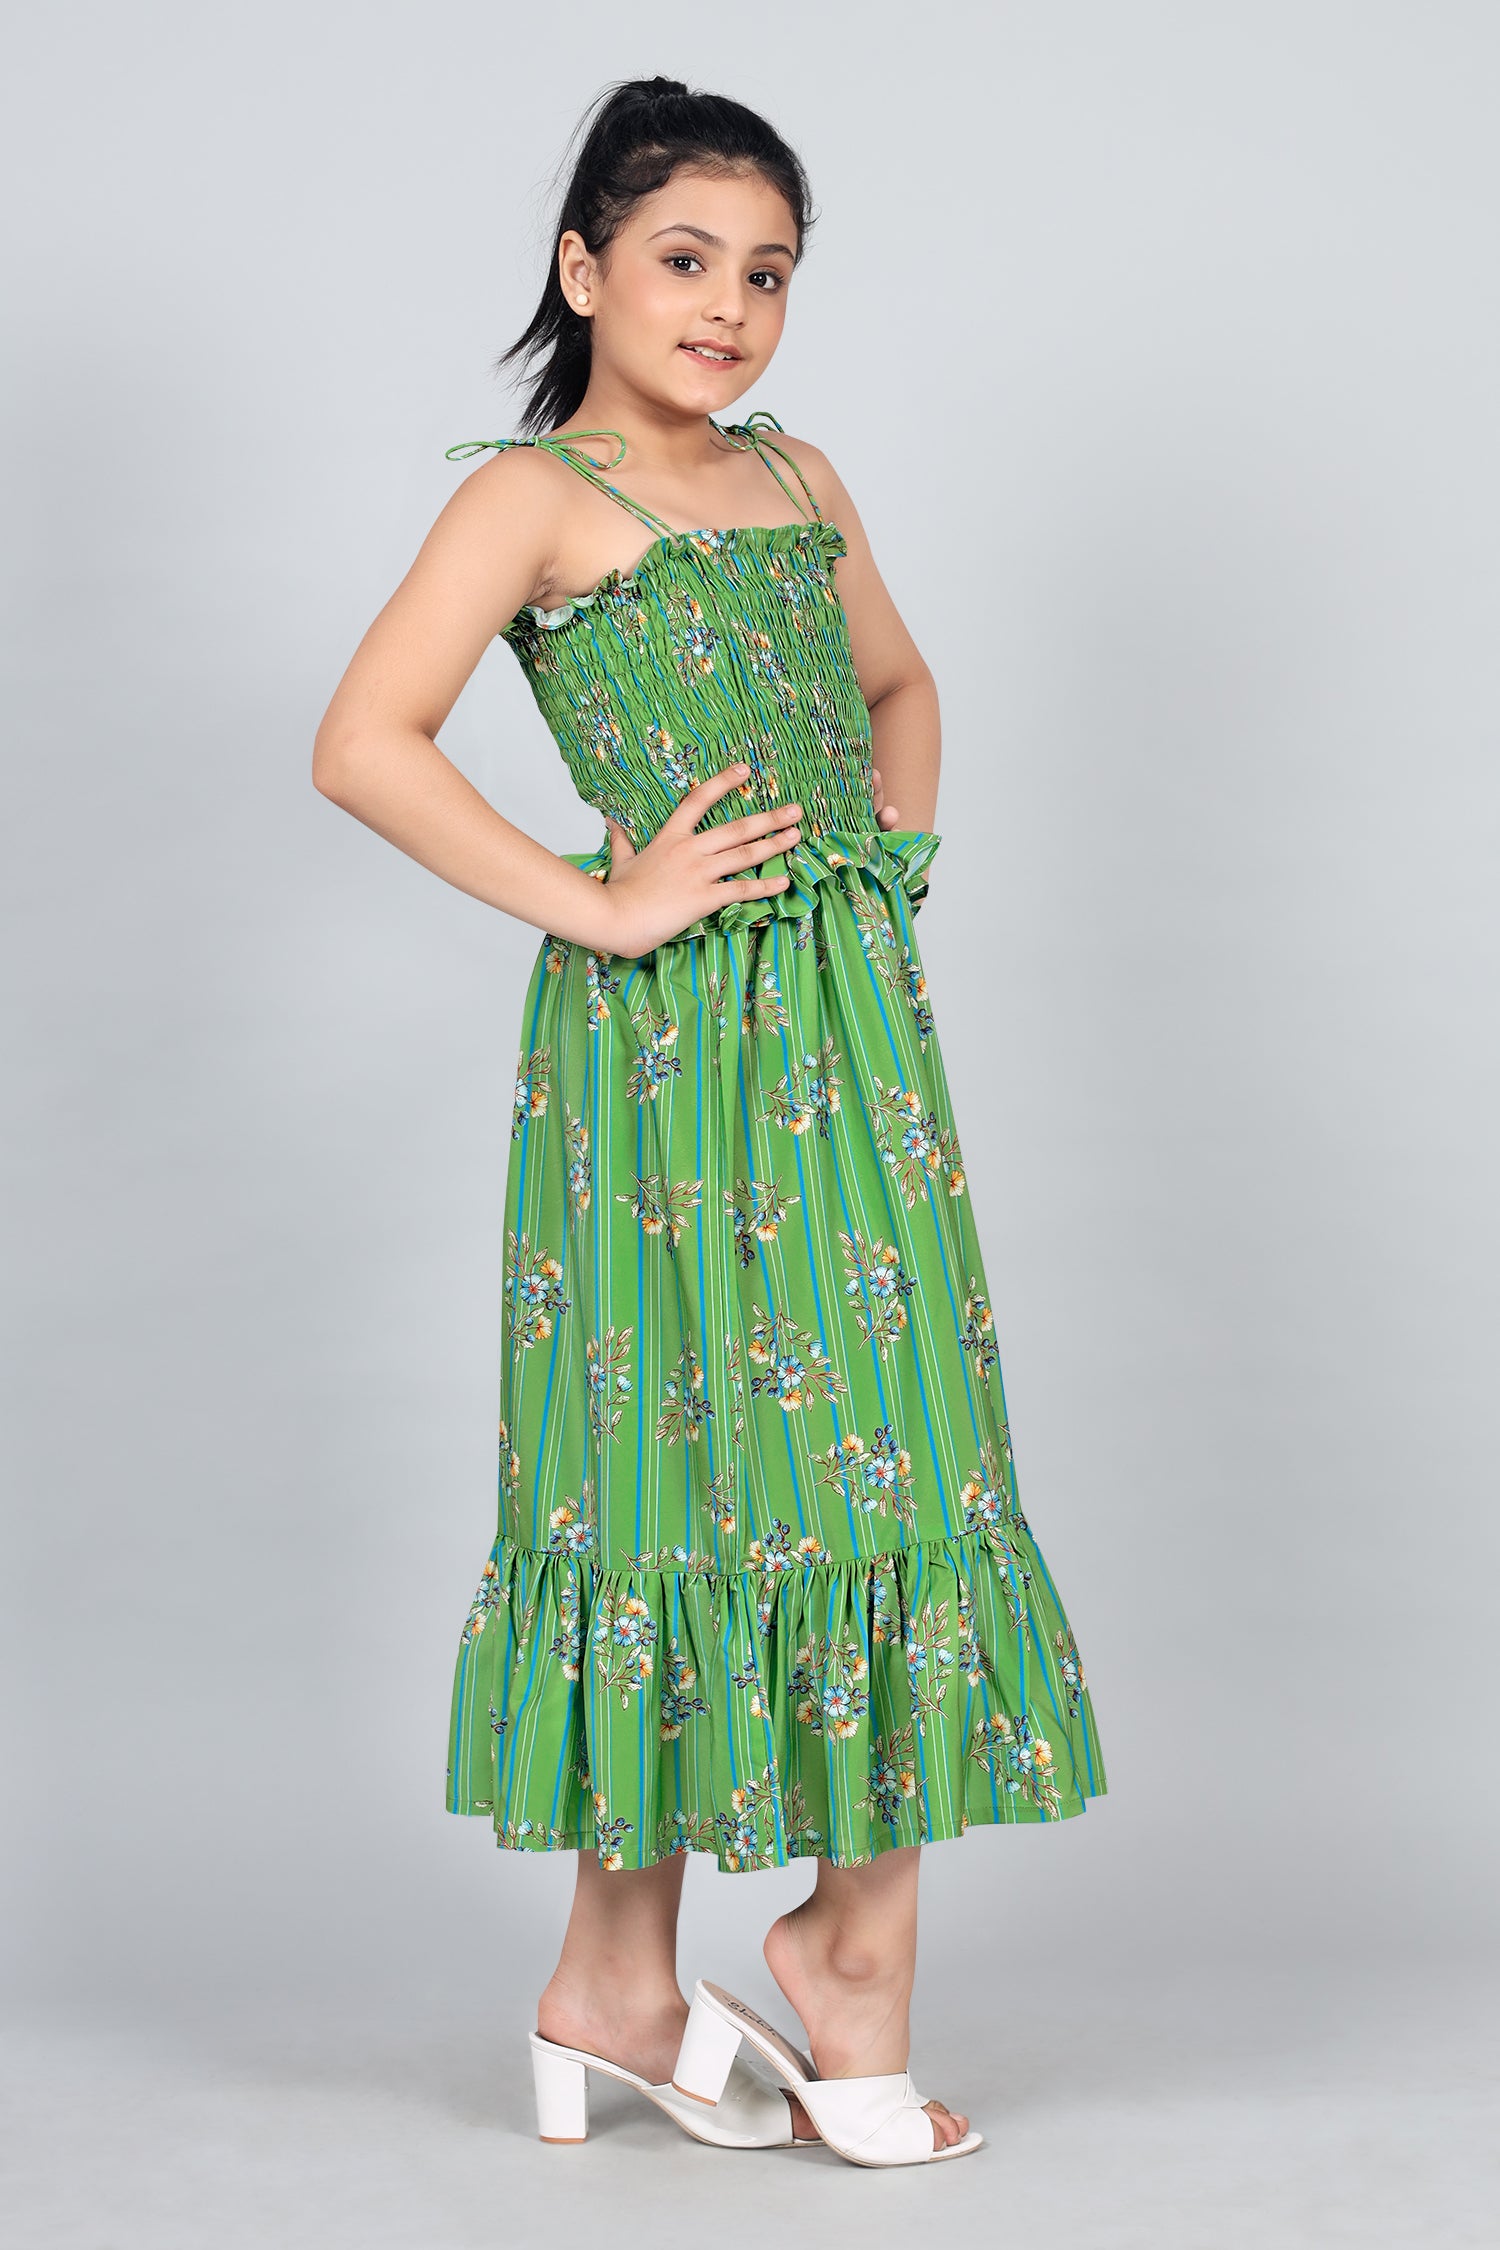 Emerald Green Satin Dress Flower Girl Dress Satin Dress Baby Girls Dresses  Toddler Girl Birthday Gown Dress Occasion Tutu Party Dress - Etsy | Pretty  dresses for kids, 1st birthday girl dress,